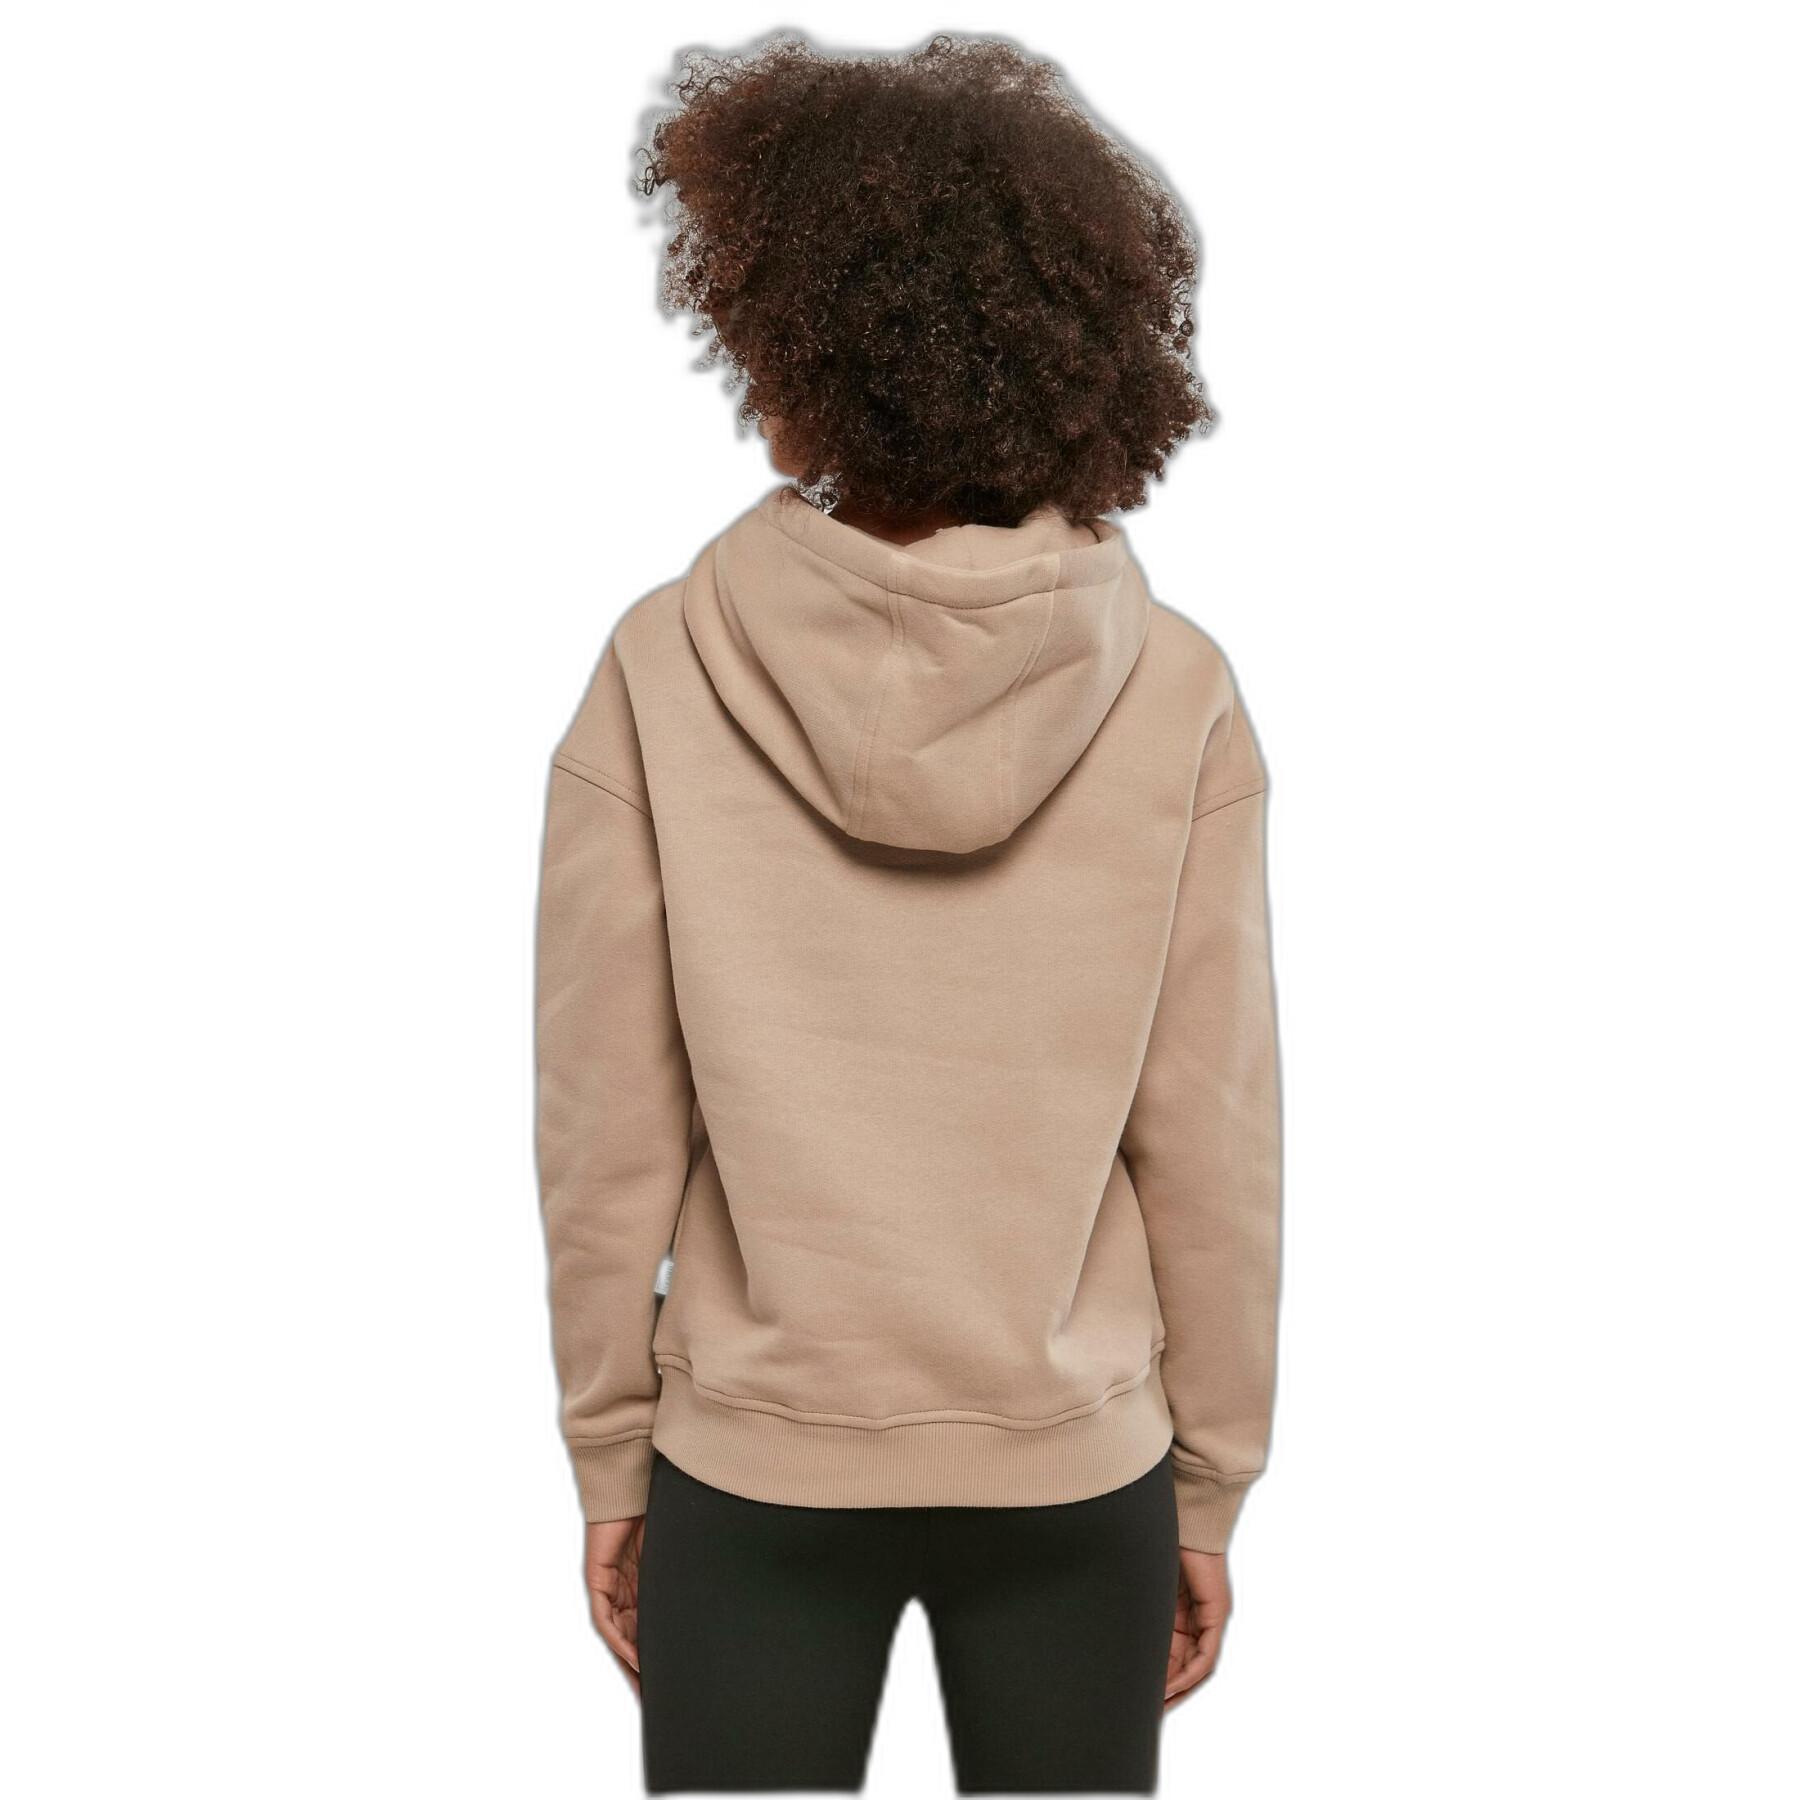 Women's hooded sweatshirt Urban Classics Organic